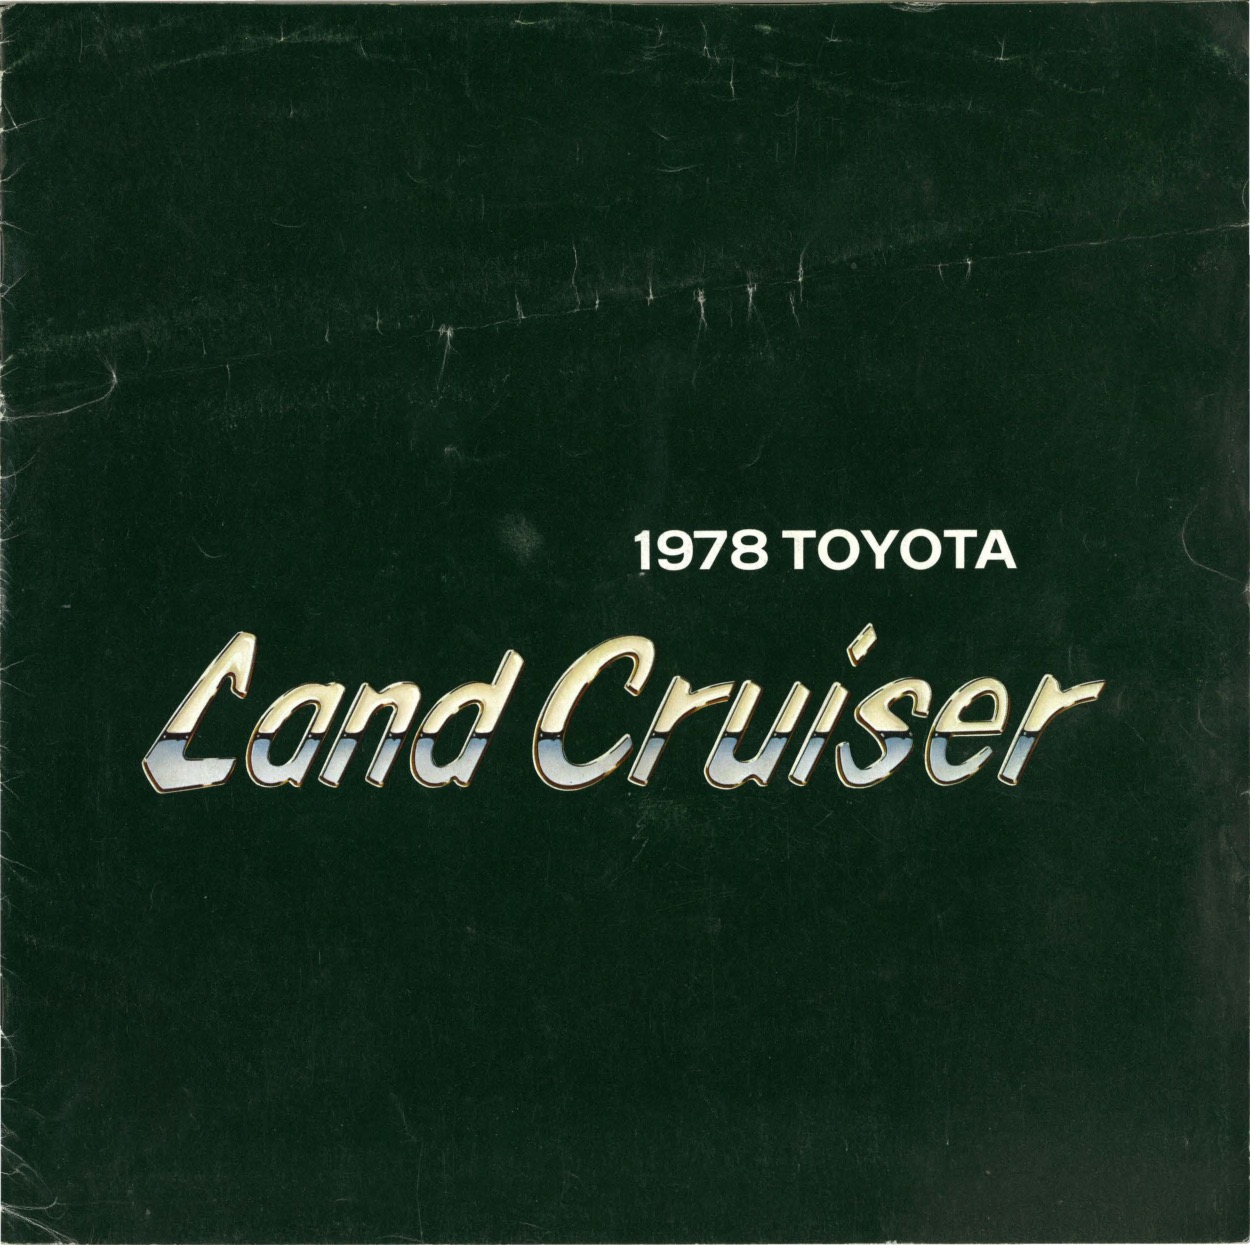 1978 Toyota Land Cruiser Brochure